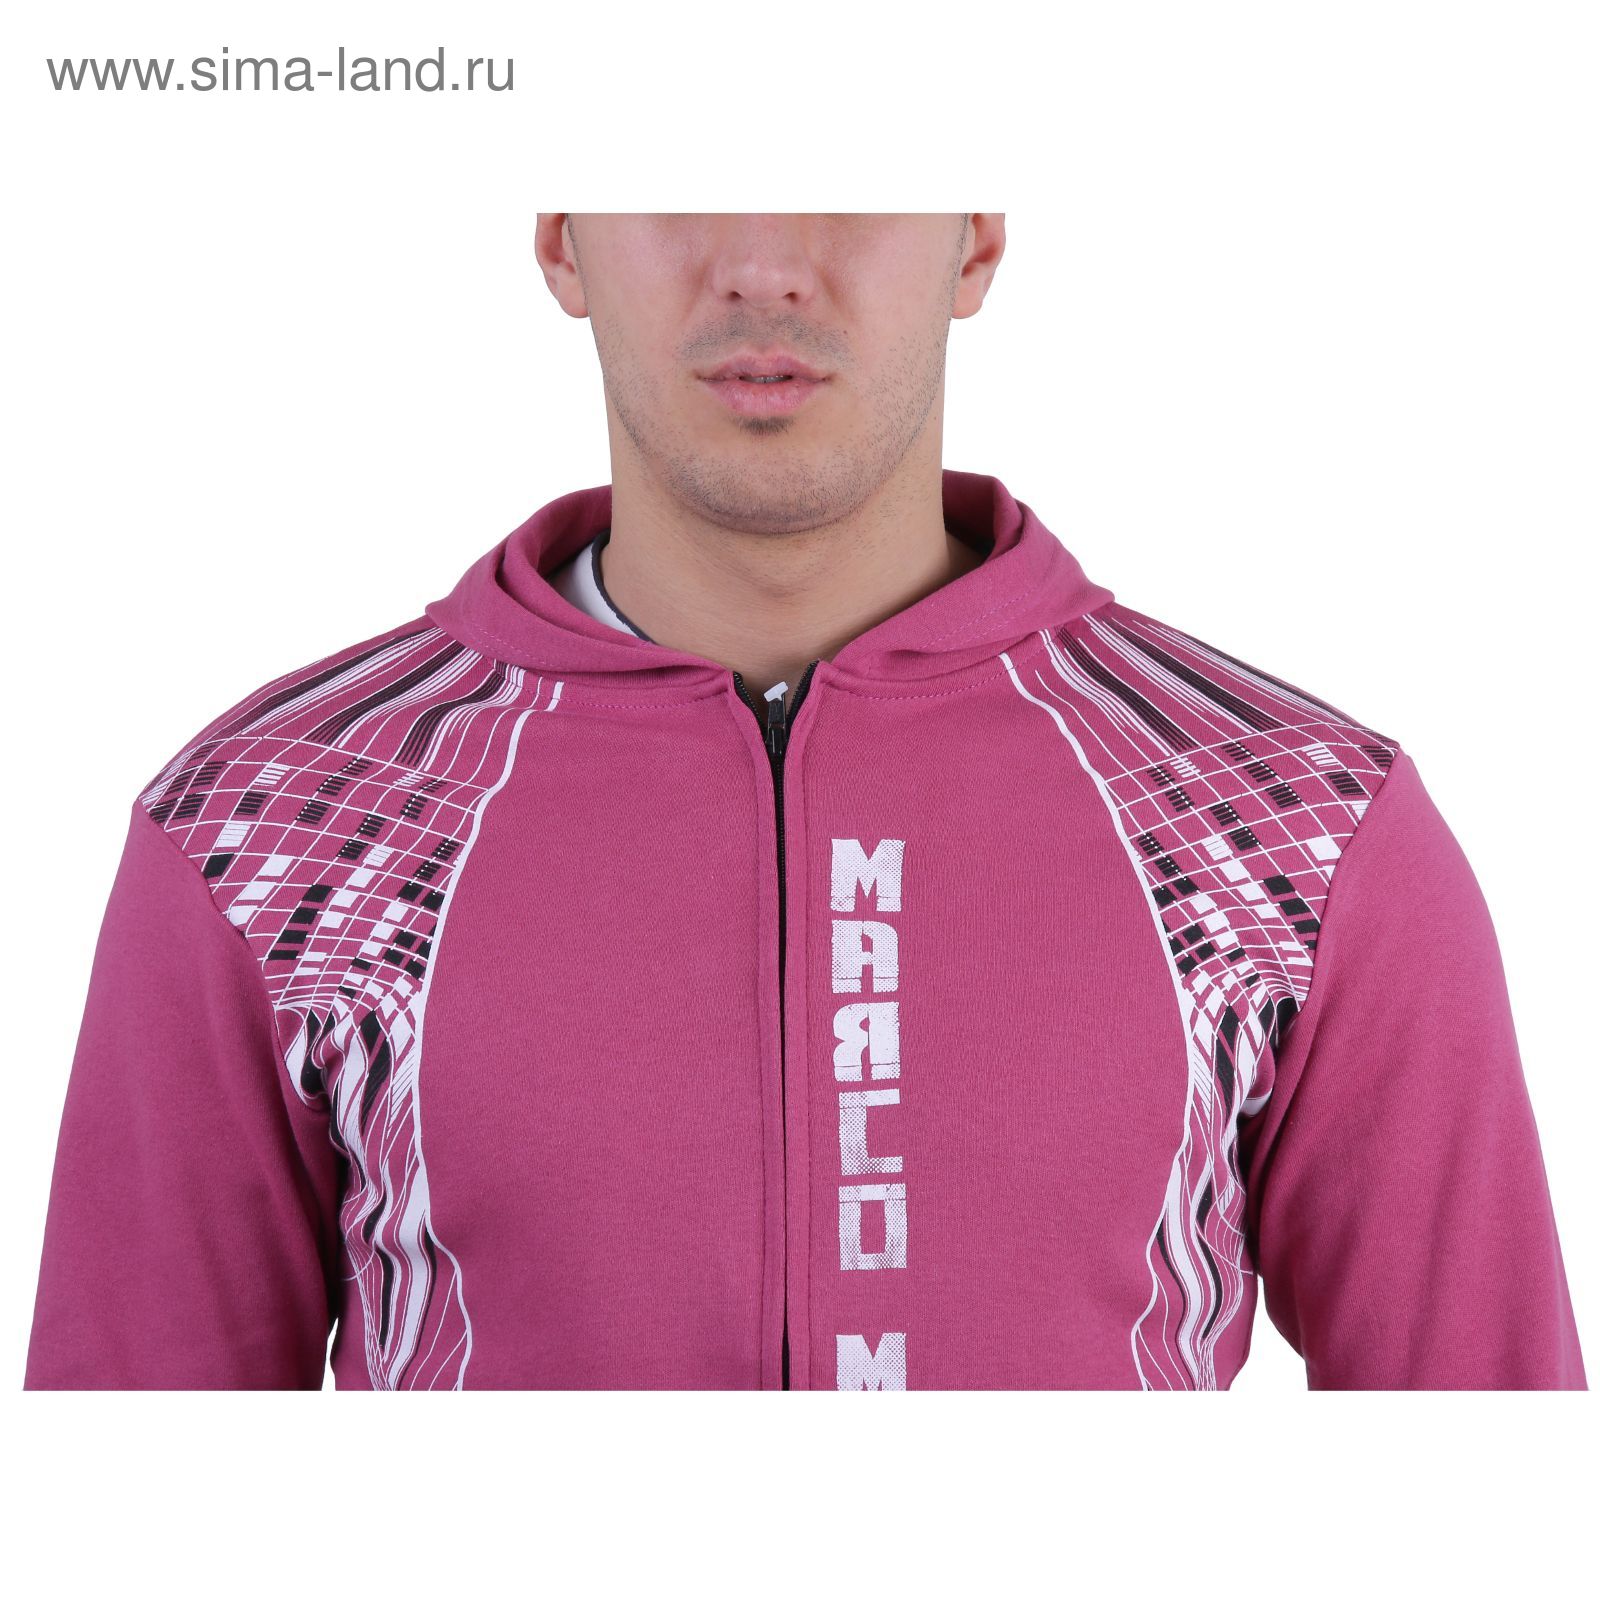 Куртка спортивная мужская, цвет фуксия, размер L, интерлок (арт. 514)